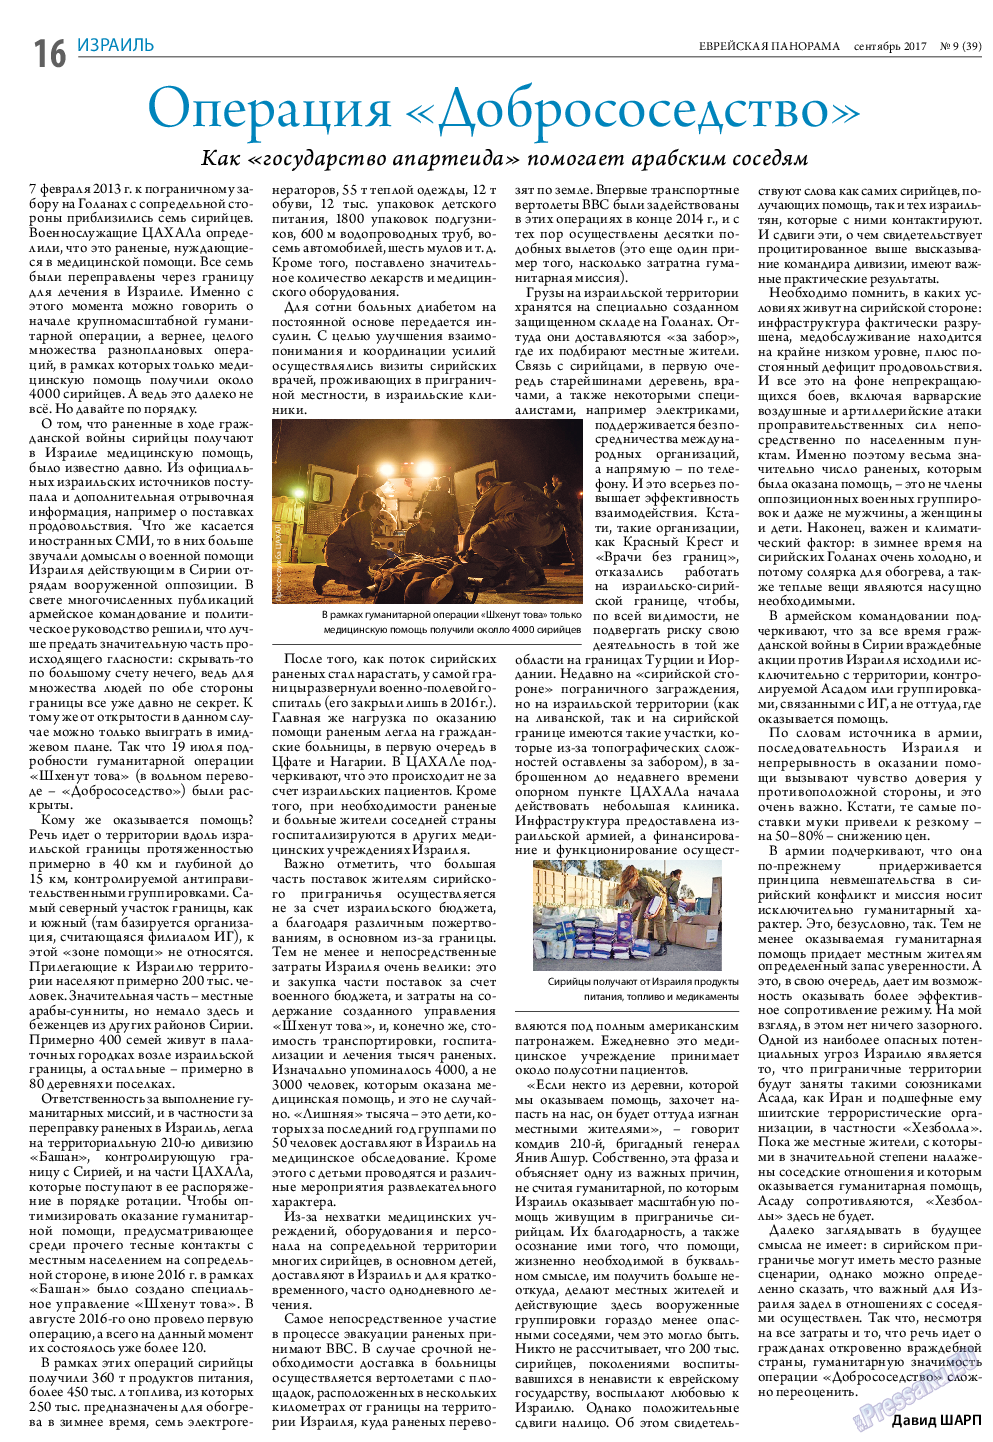 Еврейская панорама, газета. 2017 №9 стр.16